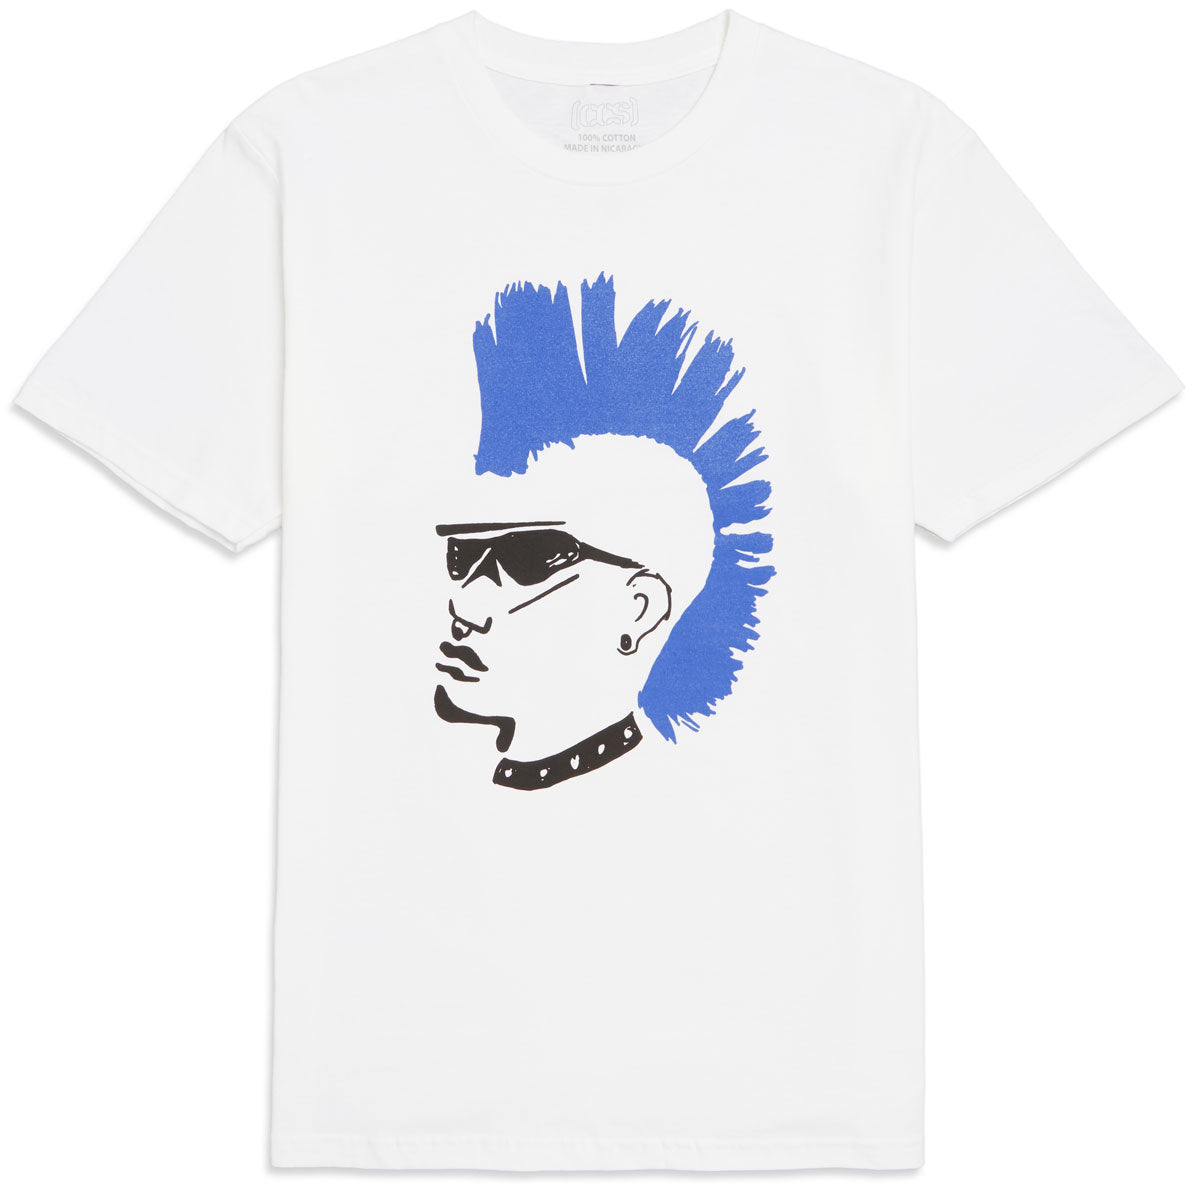 CCS OG Punk T-Shirt - White/Blue image 1